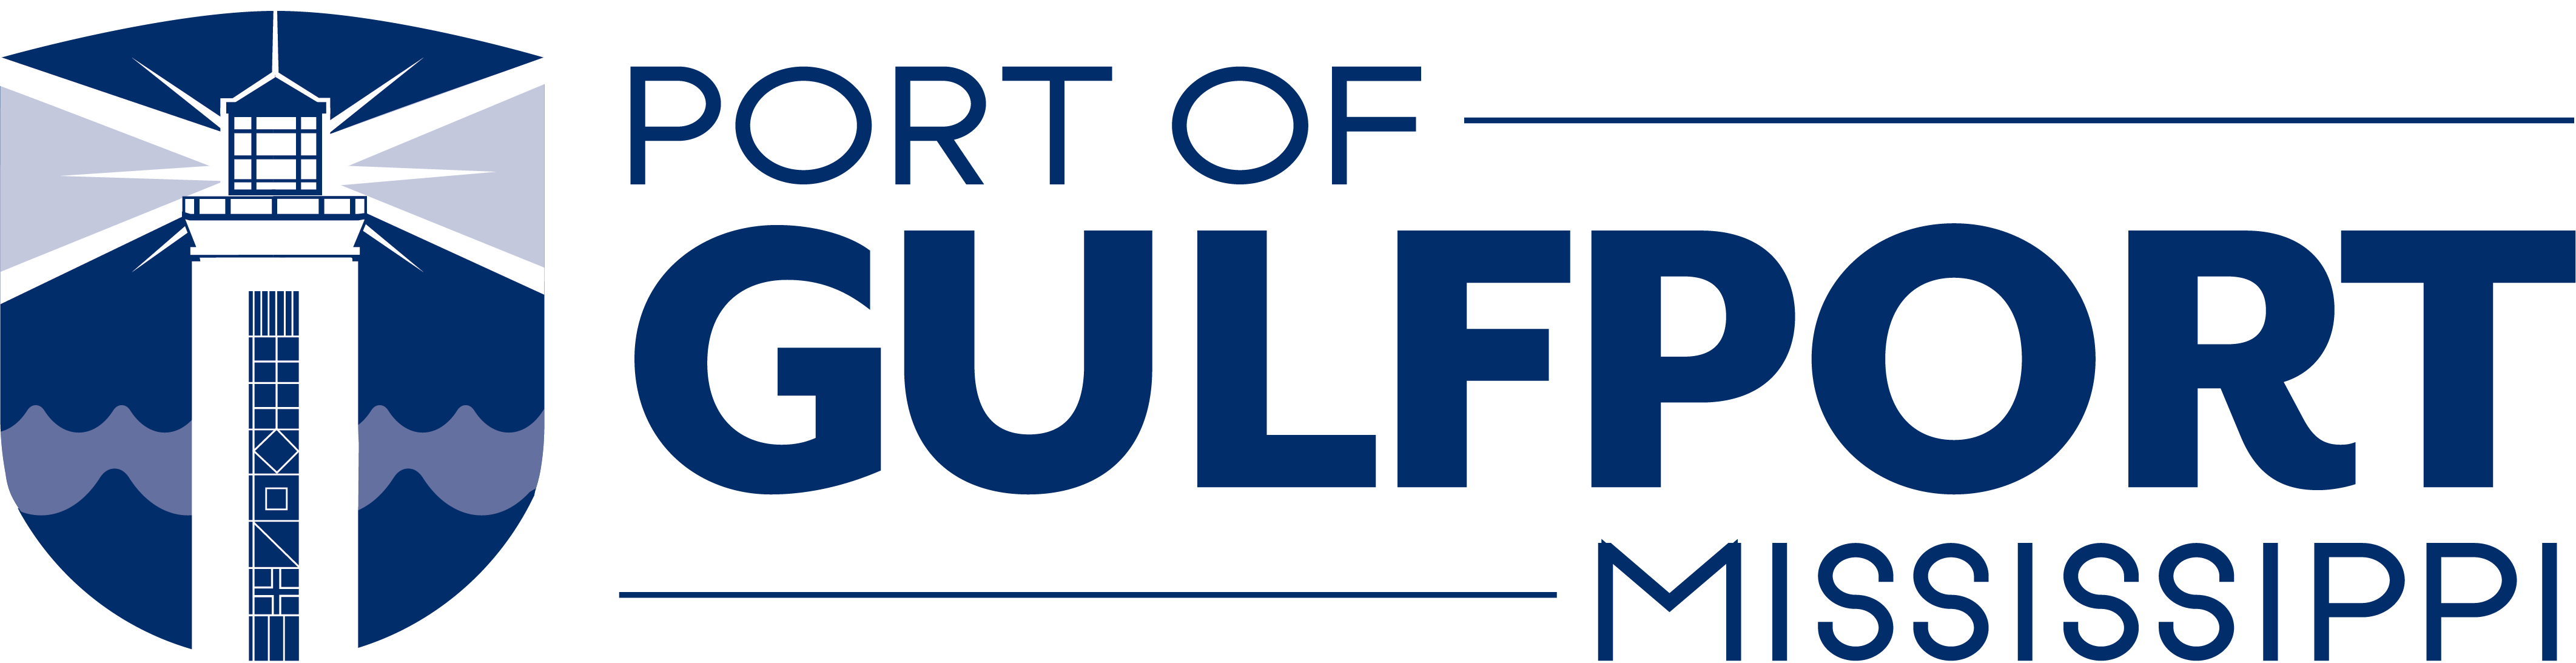 Port-of-Gulfport-logo_Horz_All_Blue-copy (1)